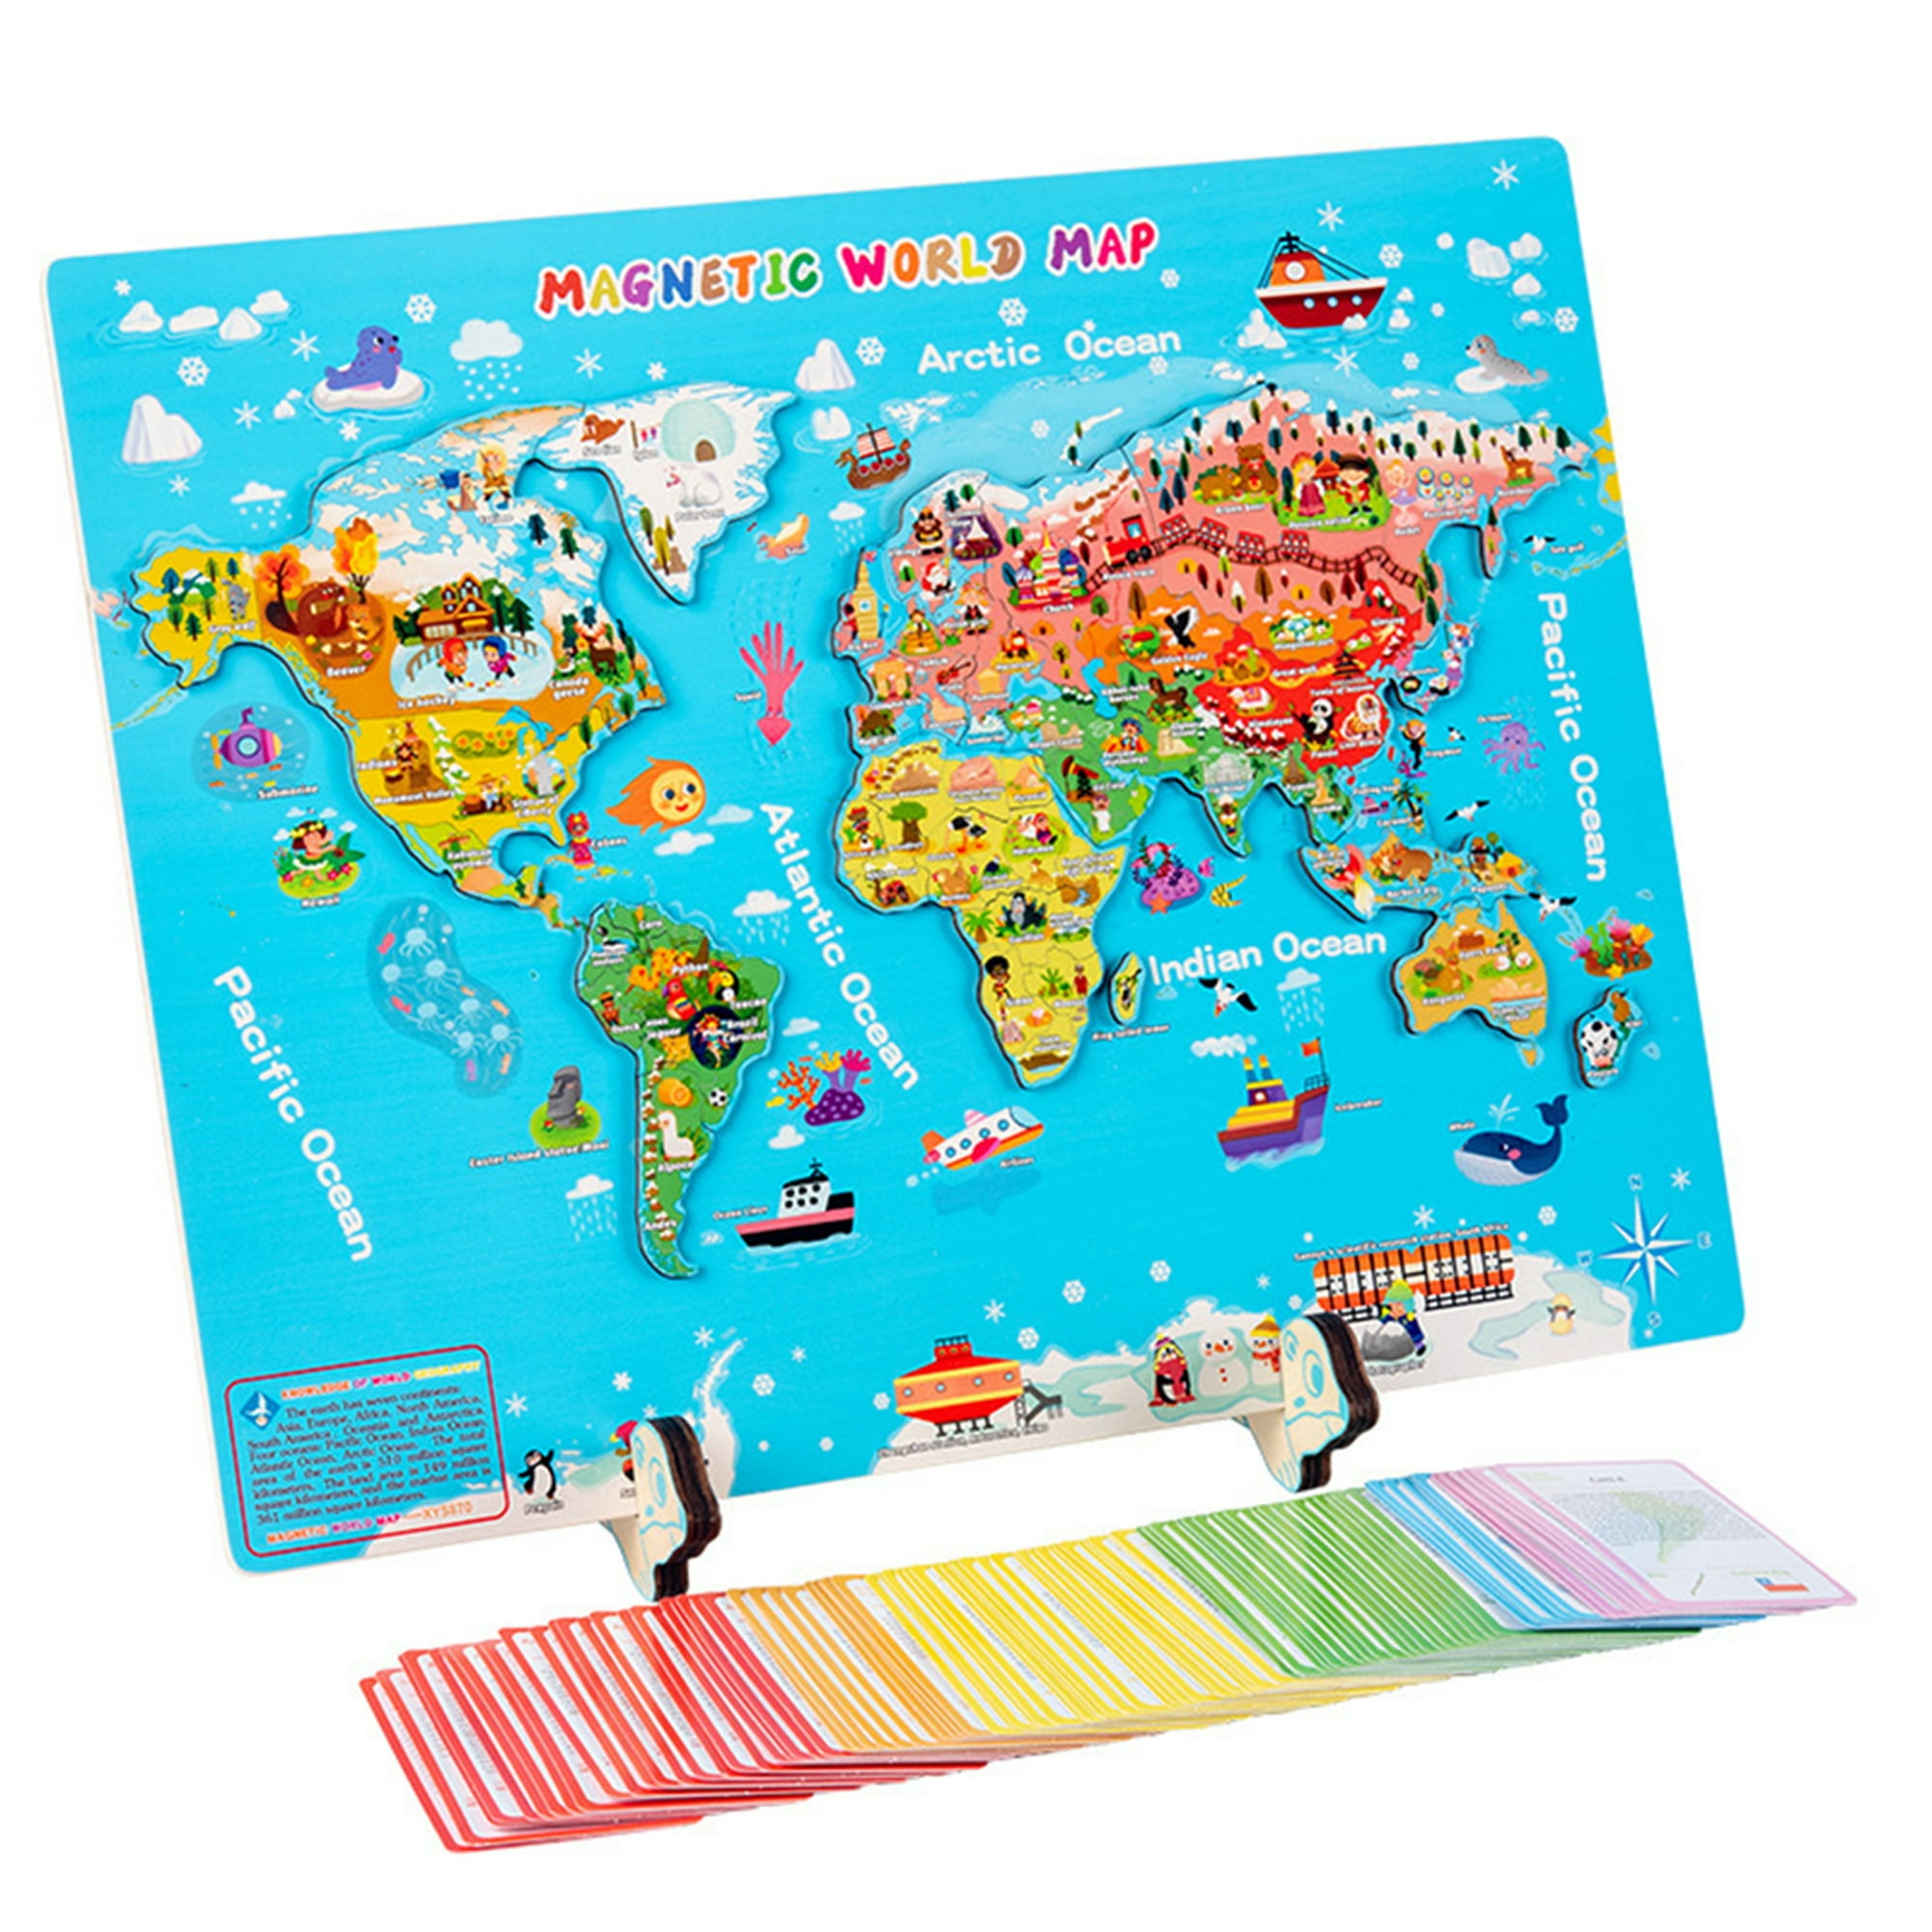 Apli Kids: mapa de rompecabezas magnético del mundo